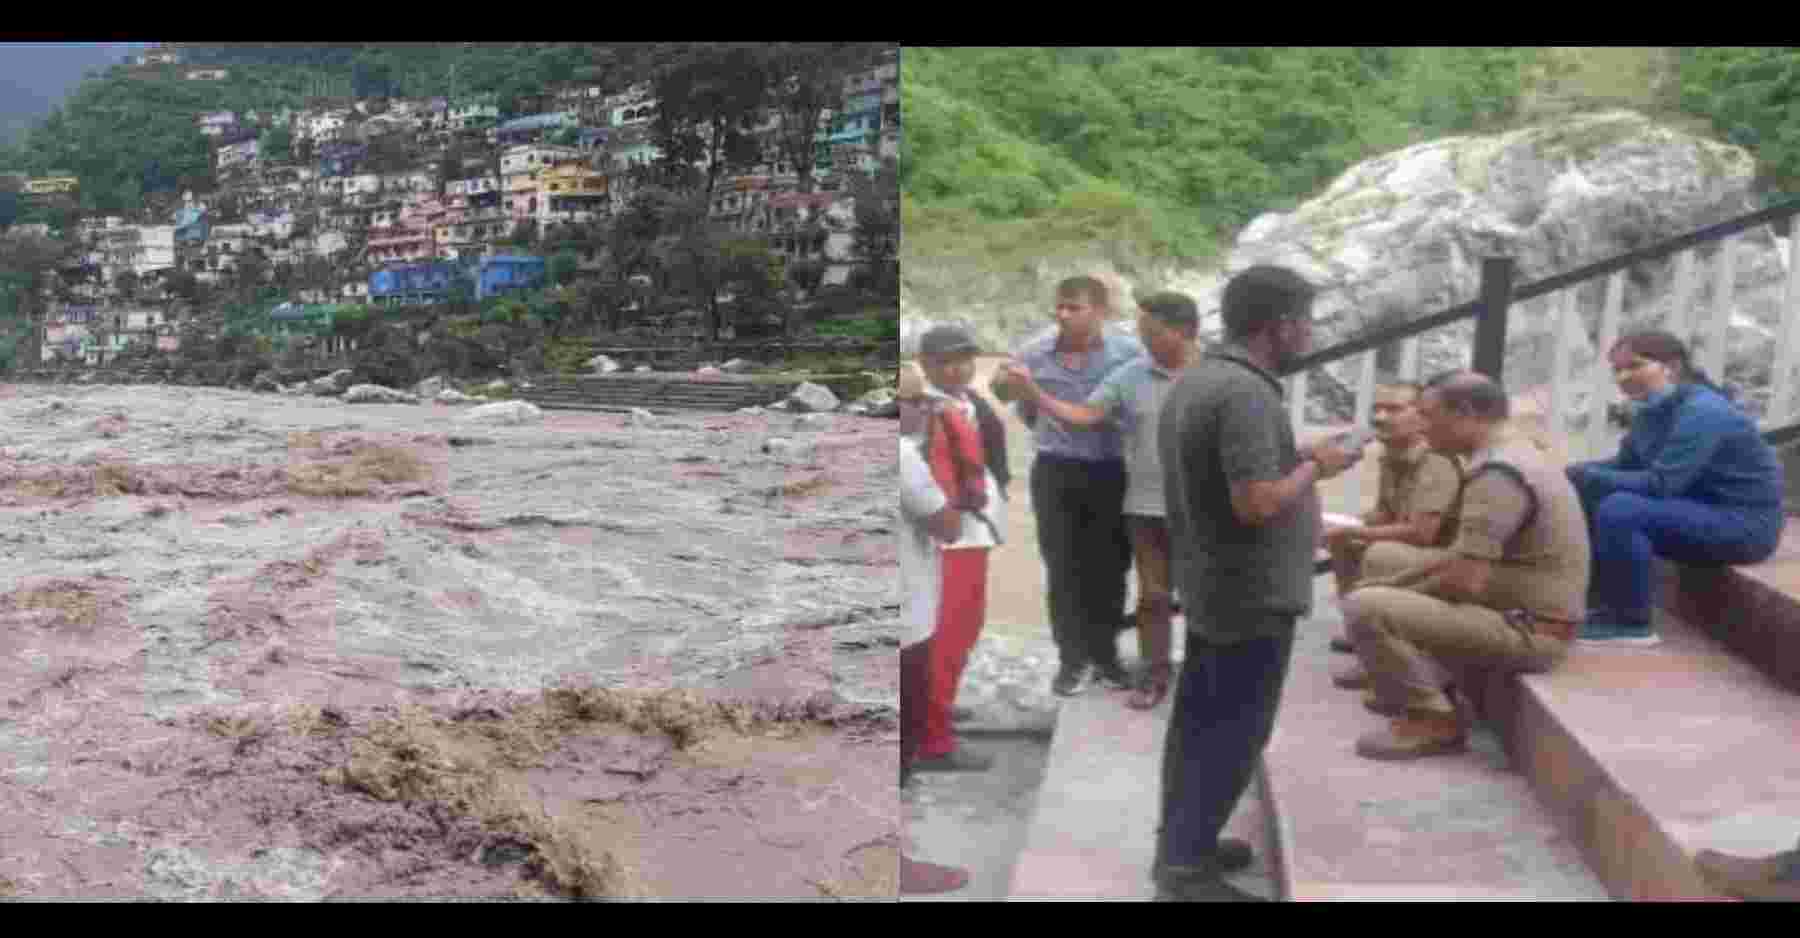 Uttarakhand news: Policemen drowned in the overflowing Alaknanda river rudraprayag, no news yet